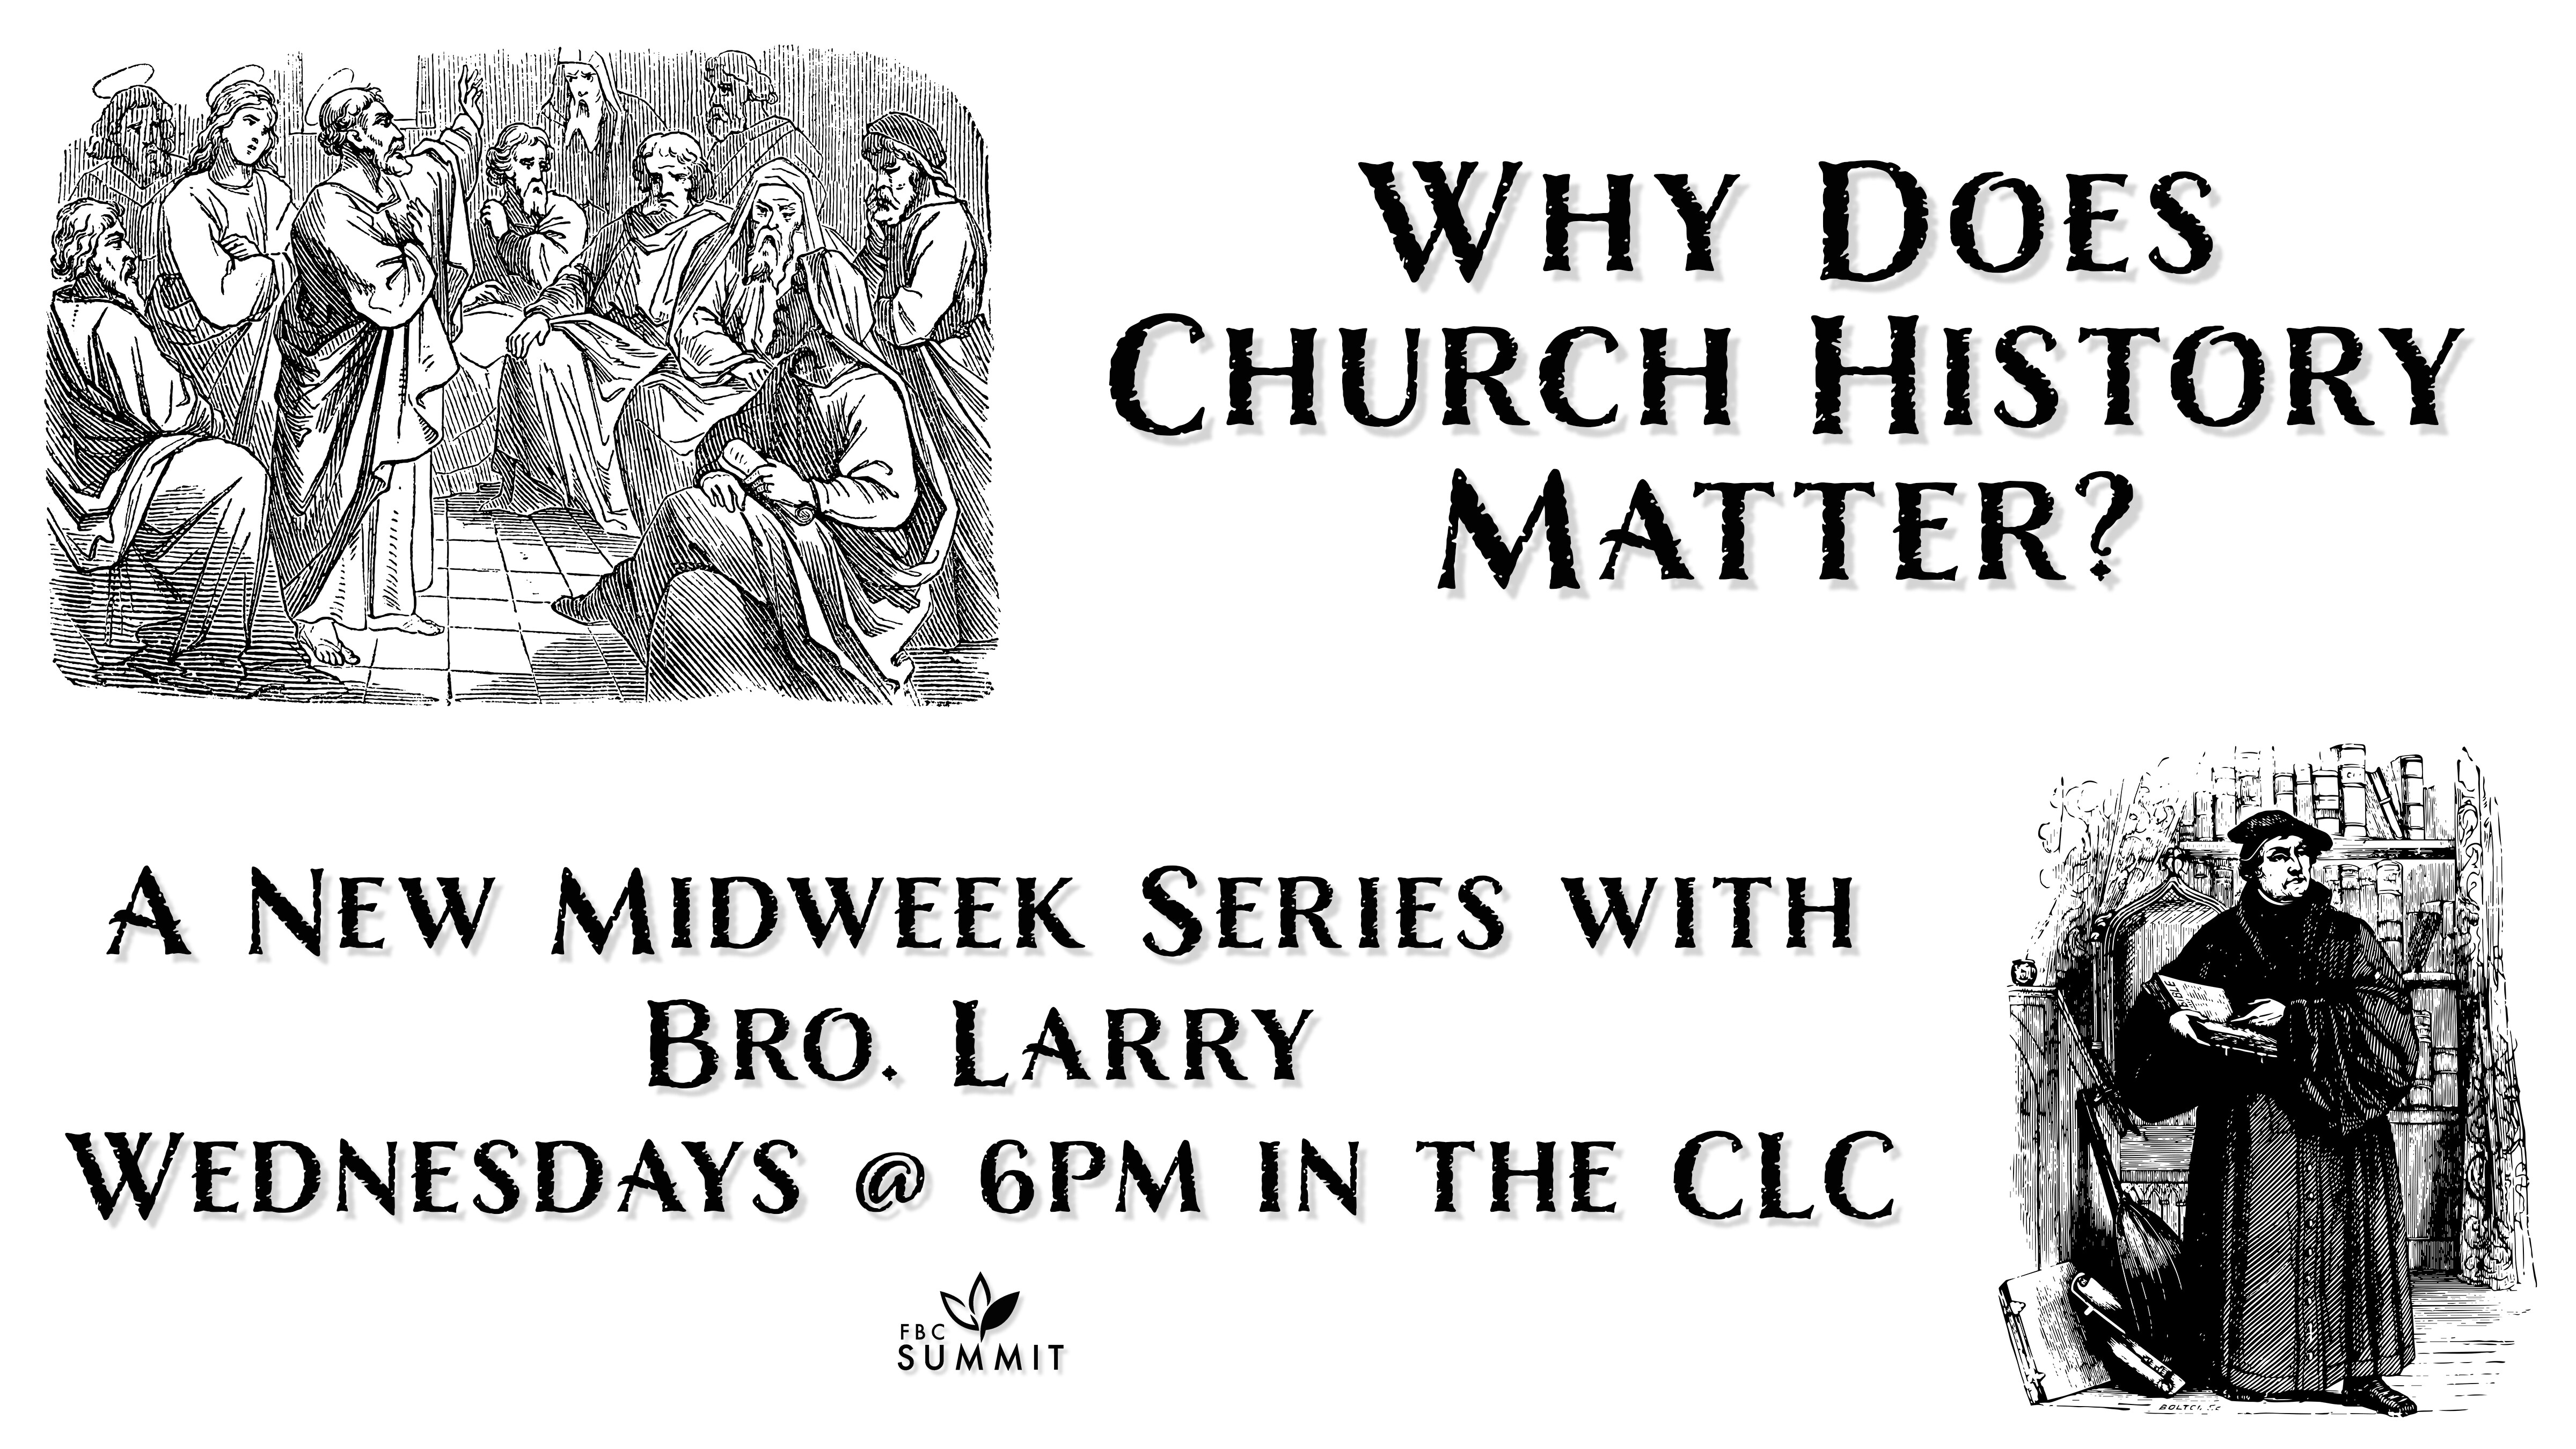 Midweek Bible Study: "Church History 101: The 5th & 6th Centuries" // Dr. Larry LeBlanc